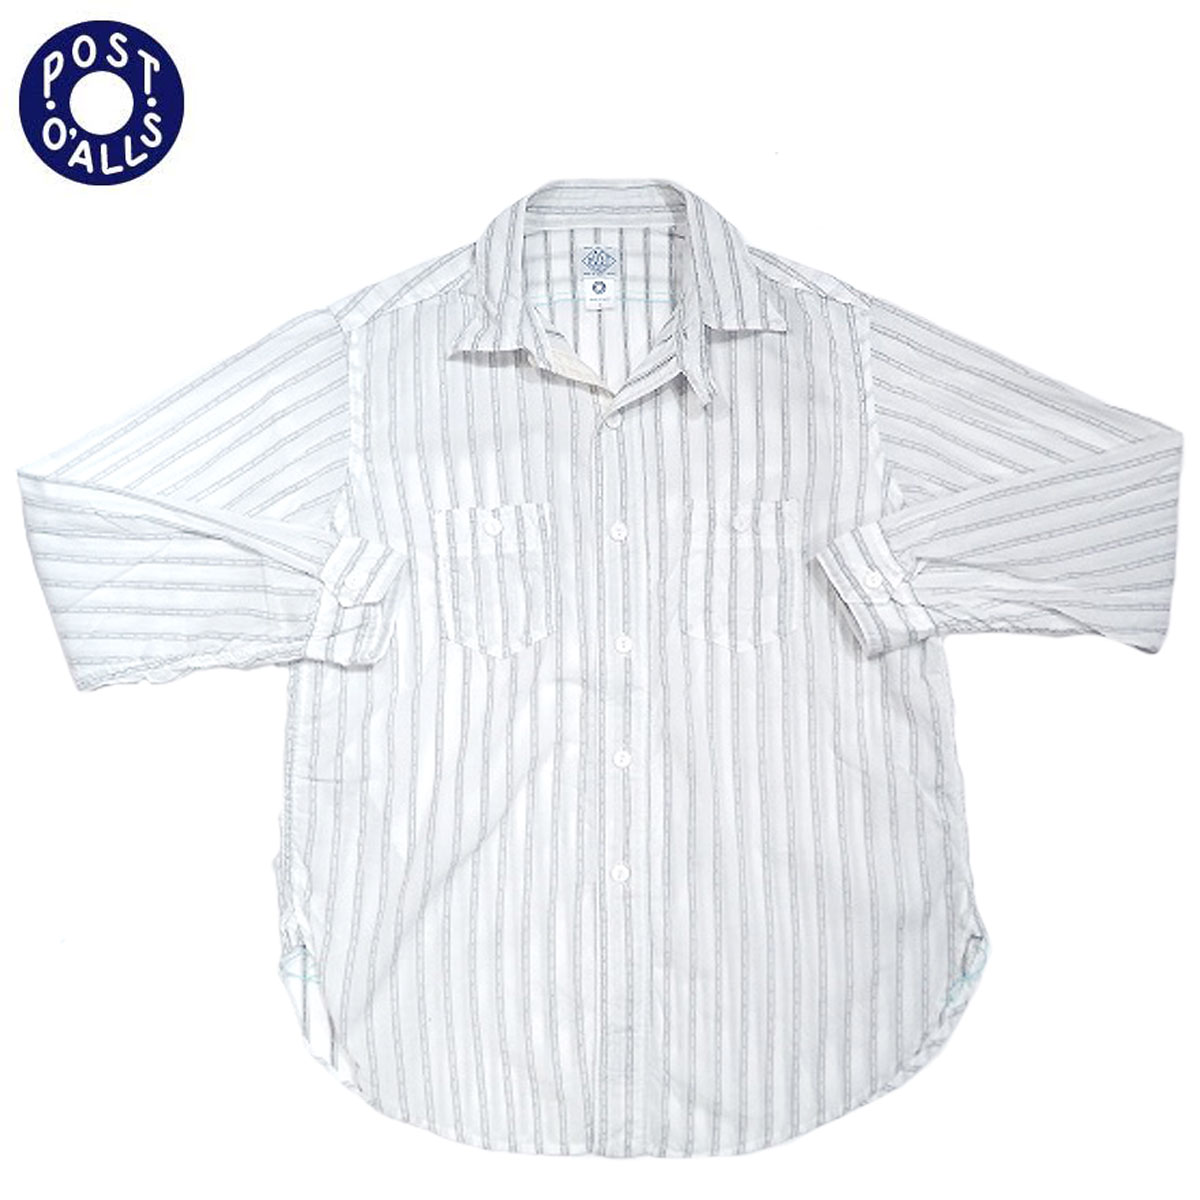 POST OVERALLS(ポストオーバーオールズ）/ 3217 St.Louis Dobby stripe shirts/white